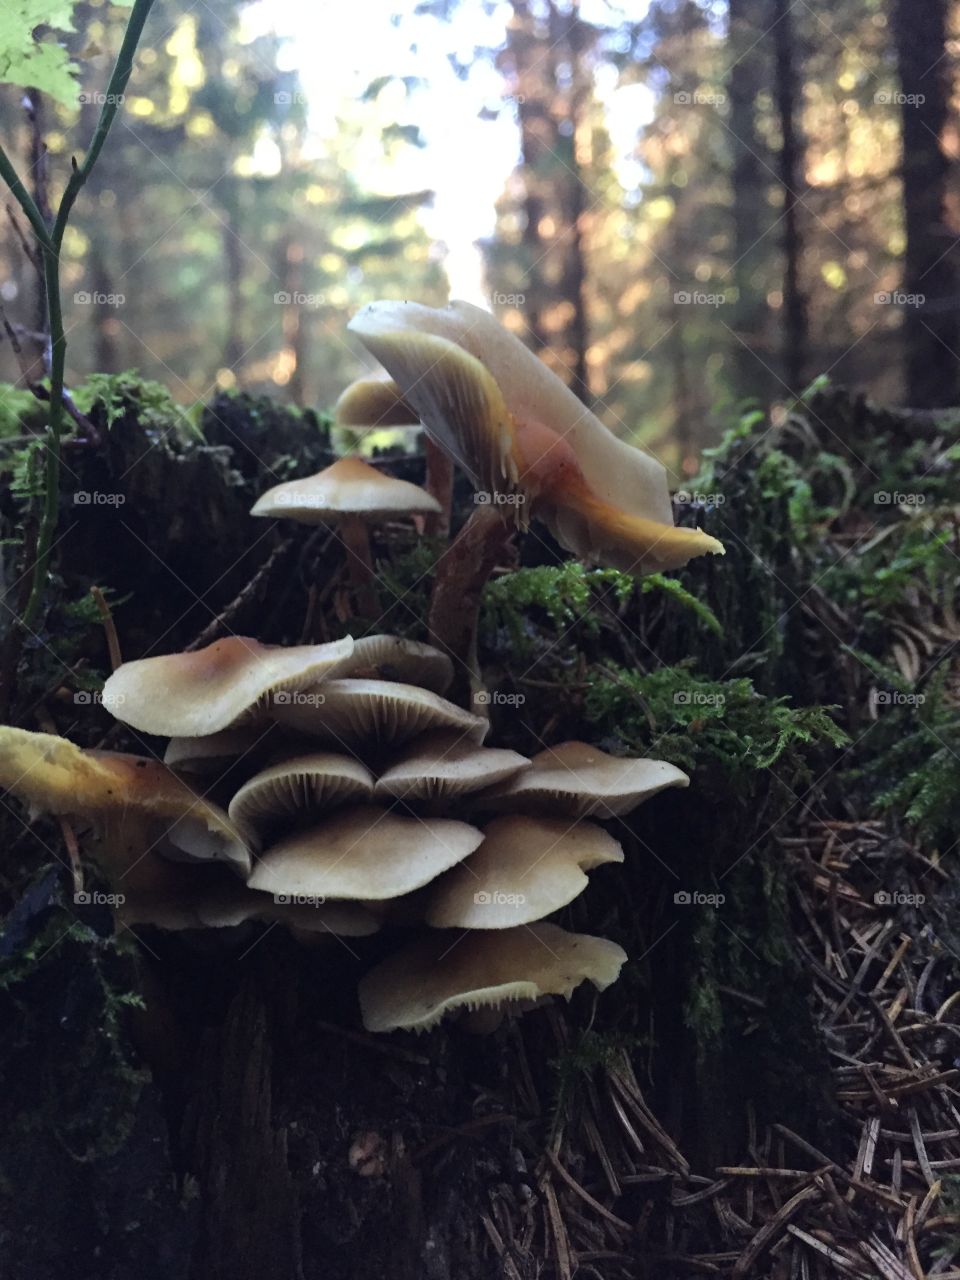 Log as a mushroom home